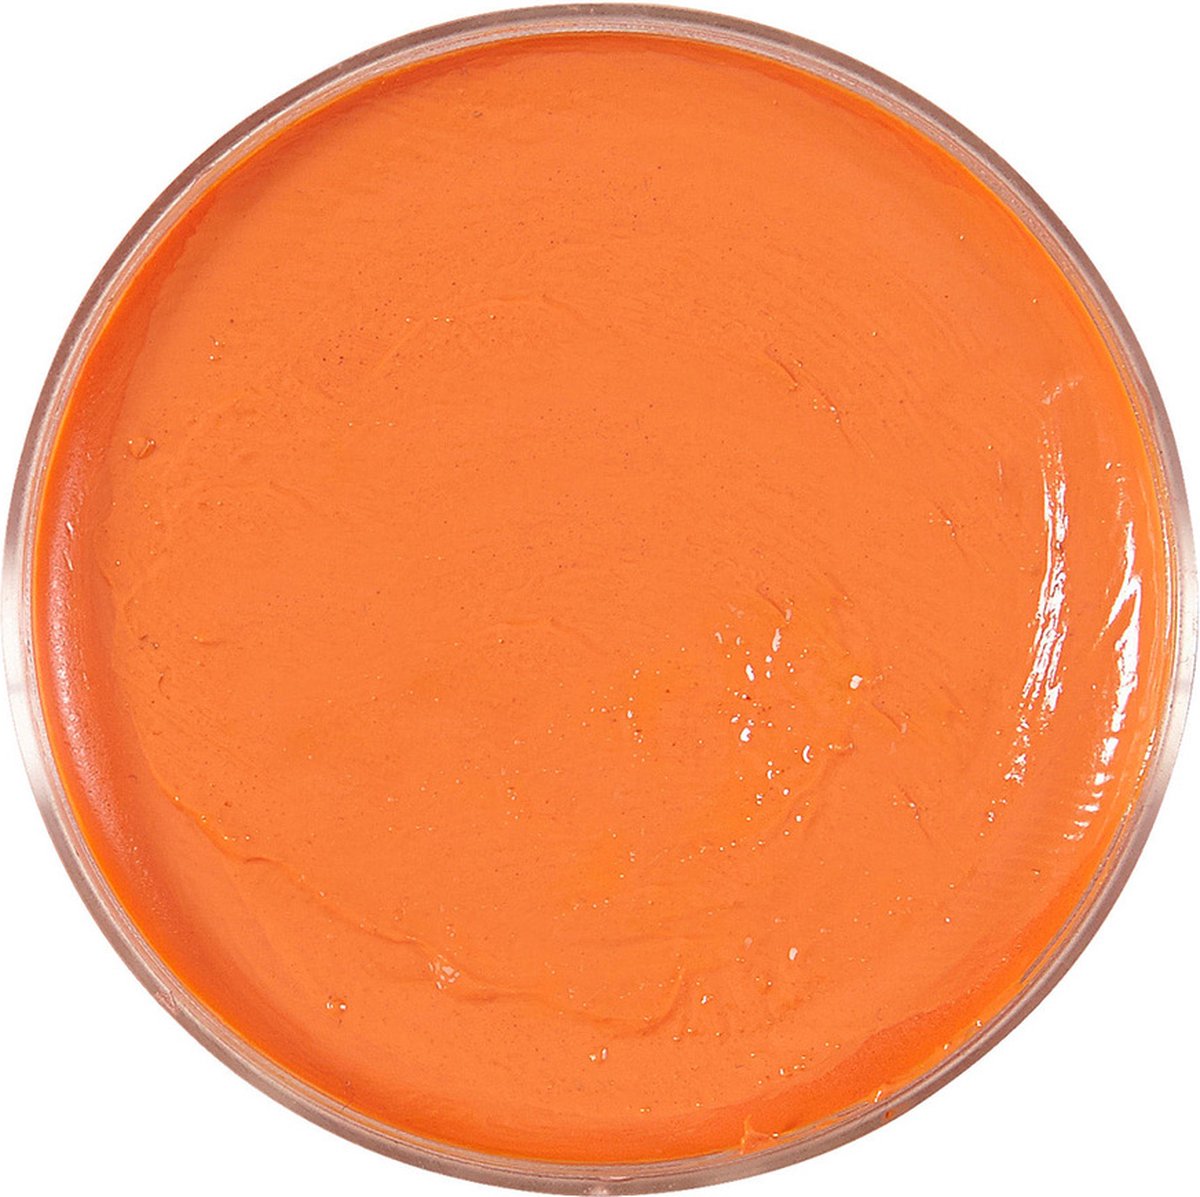 Make-Up In 25 Gram Bakje, Oranje | Halloween | Verkleedkleding